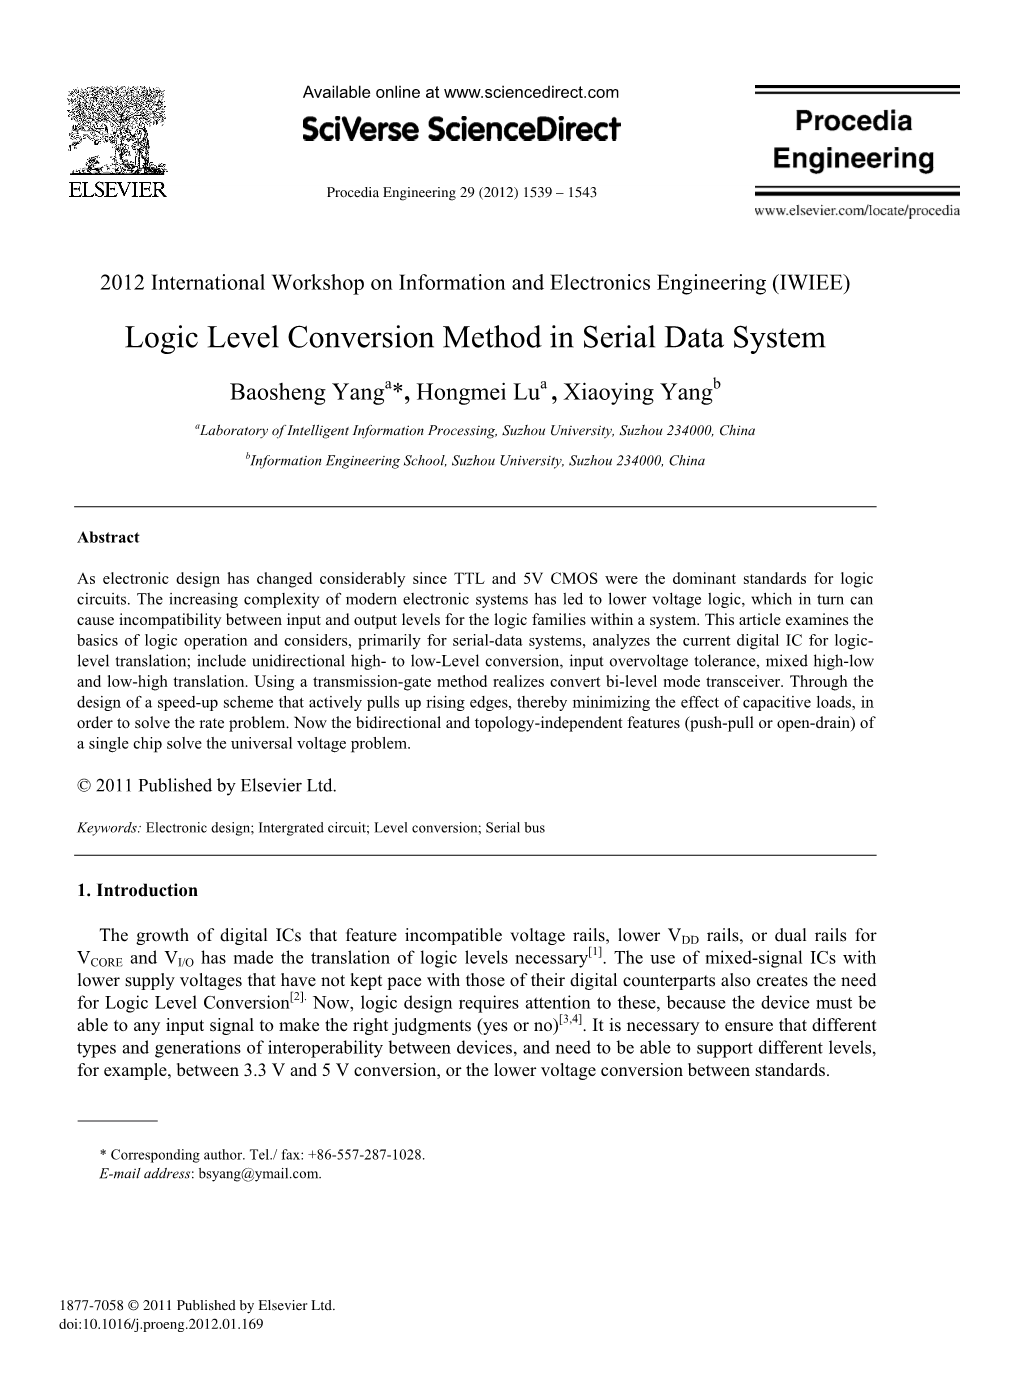 Logic Level Conversion Method in Serial Data System